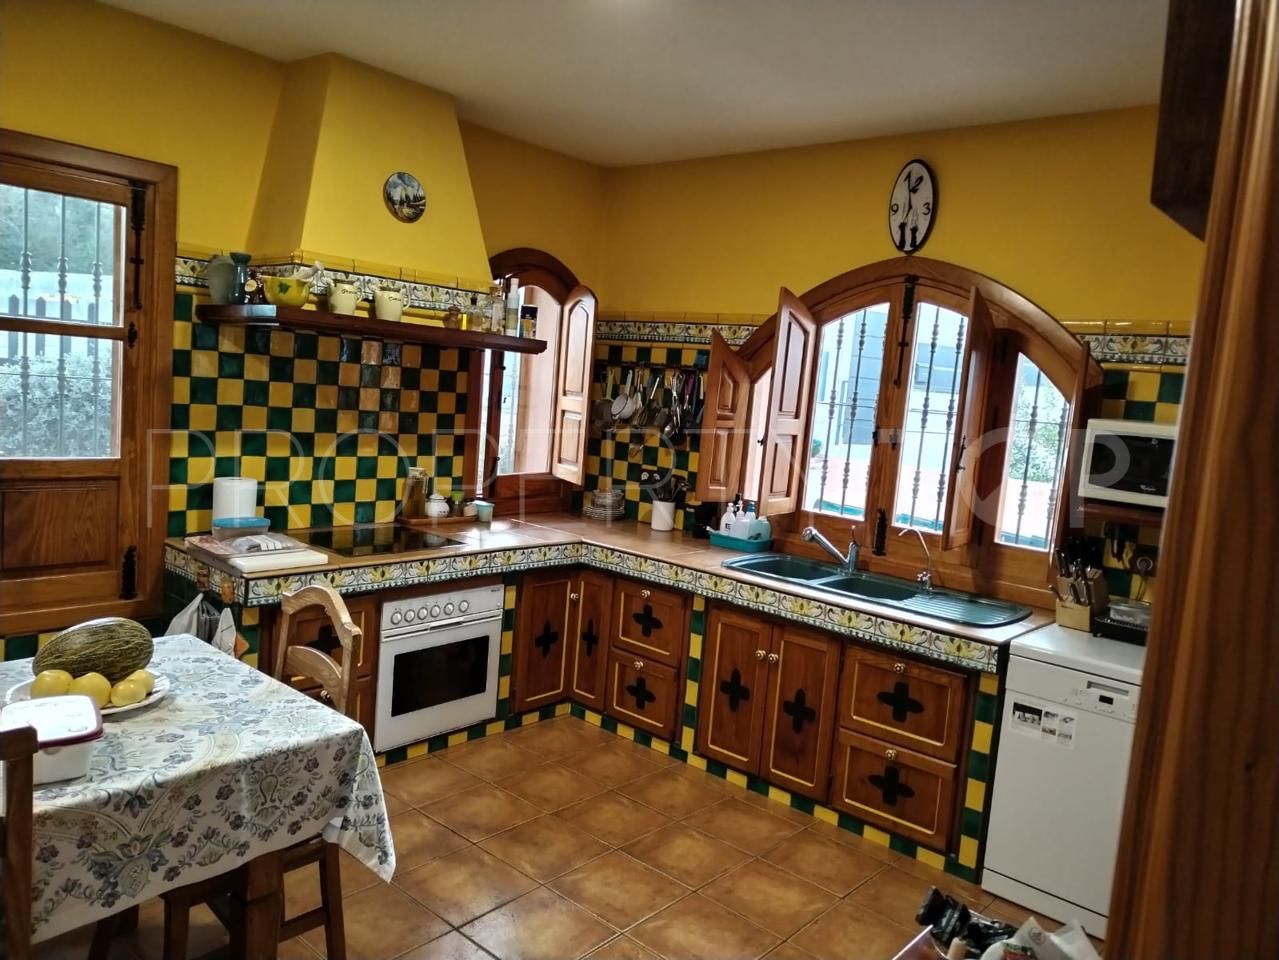 Comprar casa de campo en Malaga con 4 dormitorios